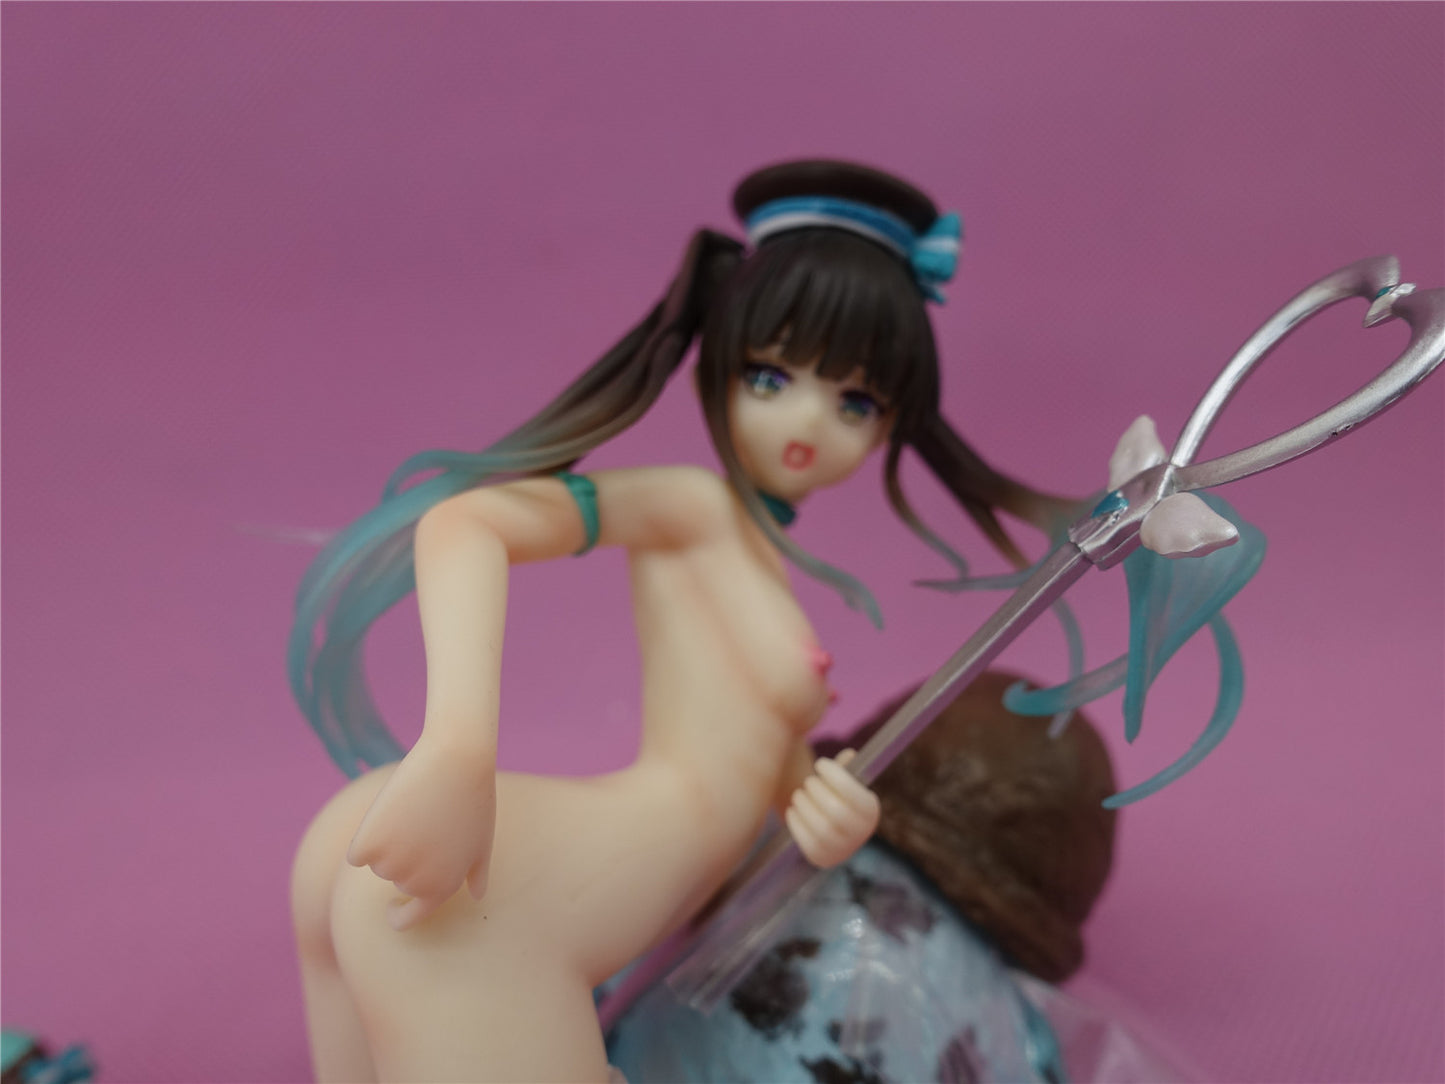 Tasting Girl Chocolate Mint flat chested 1/6 anime girl figure